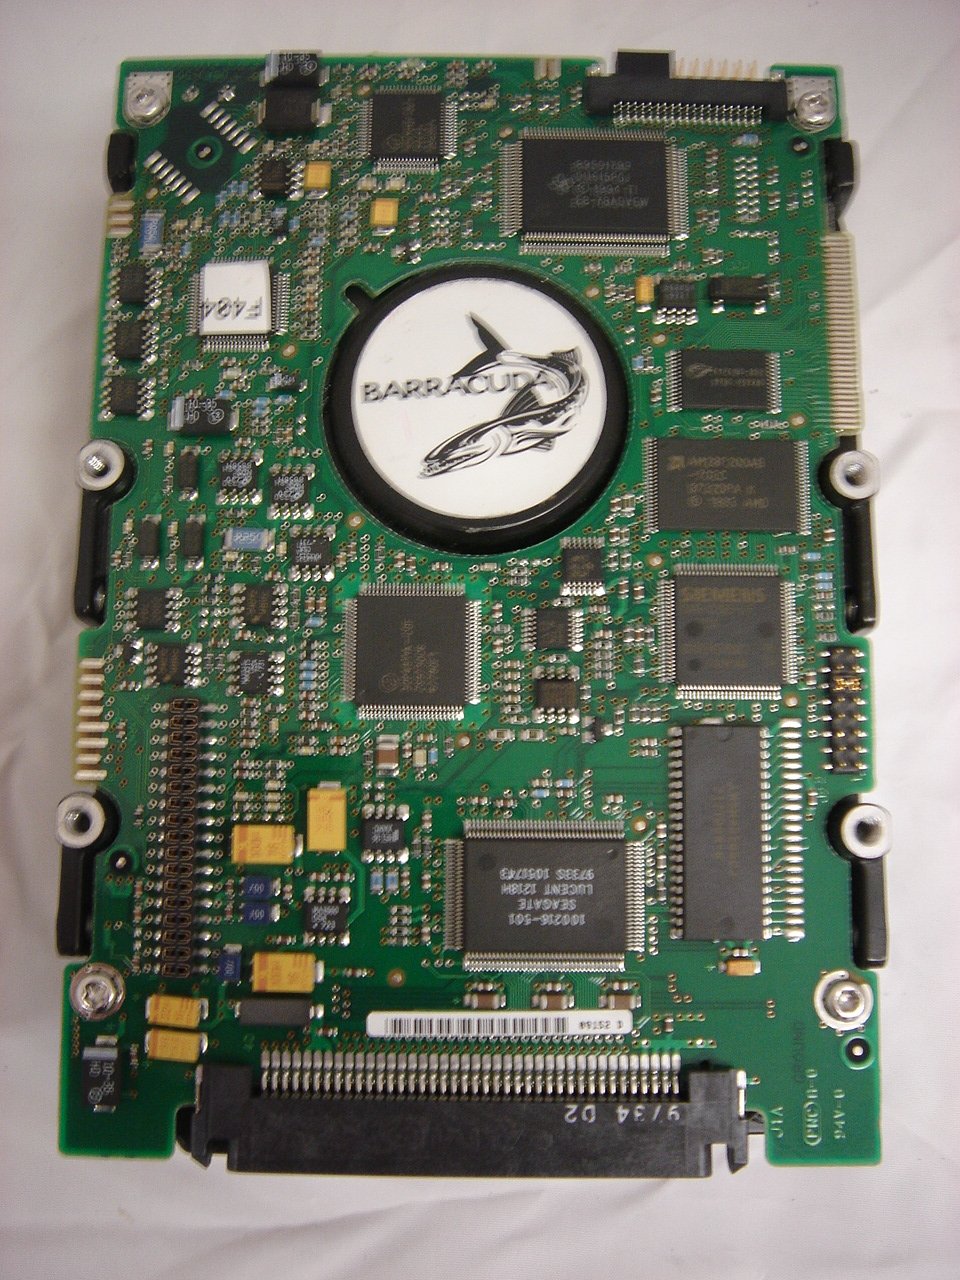 9E0006-044 - Compaq 9.1Gb 3.5" SCSI 80 Pin Hard Drive - Refurbished